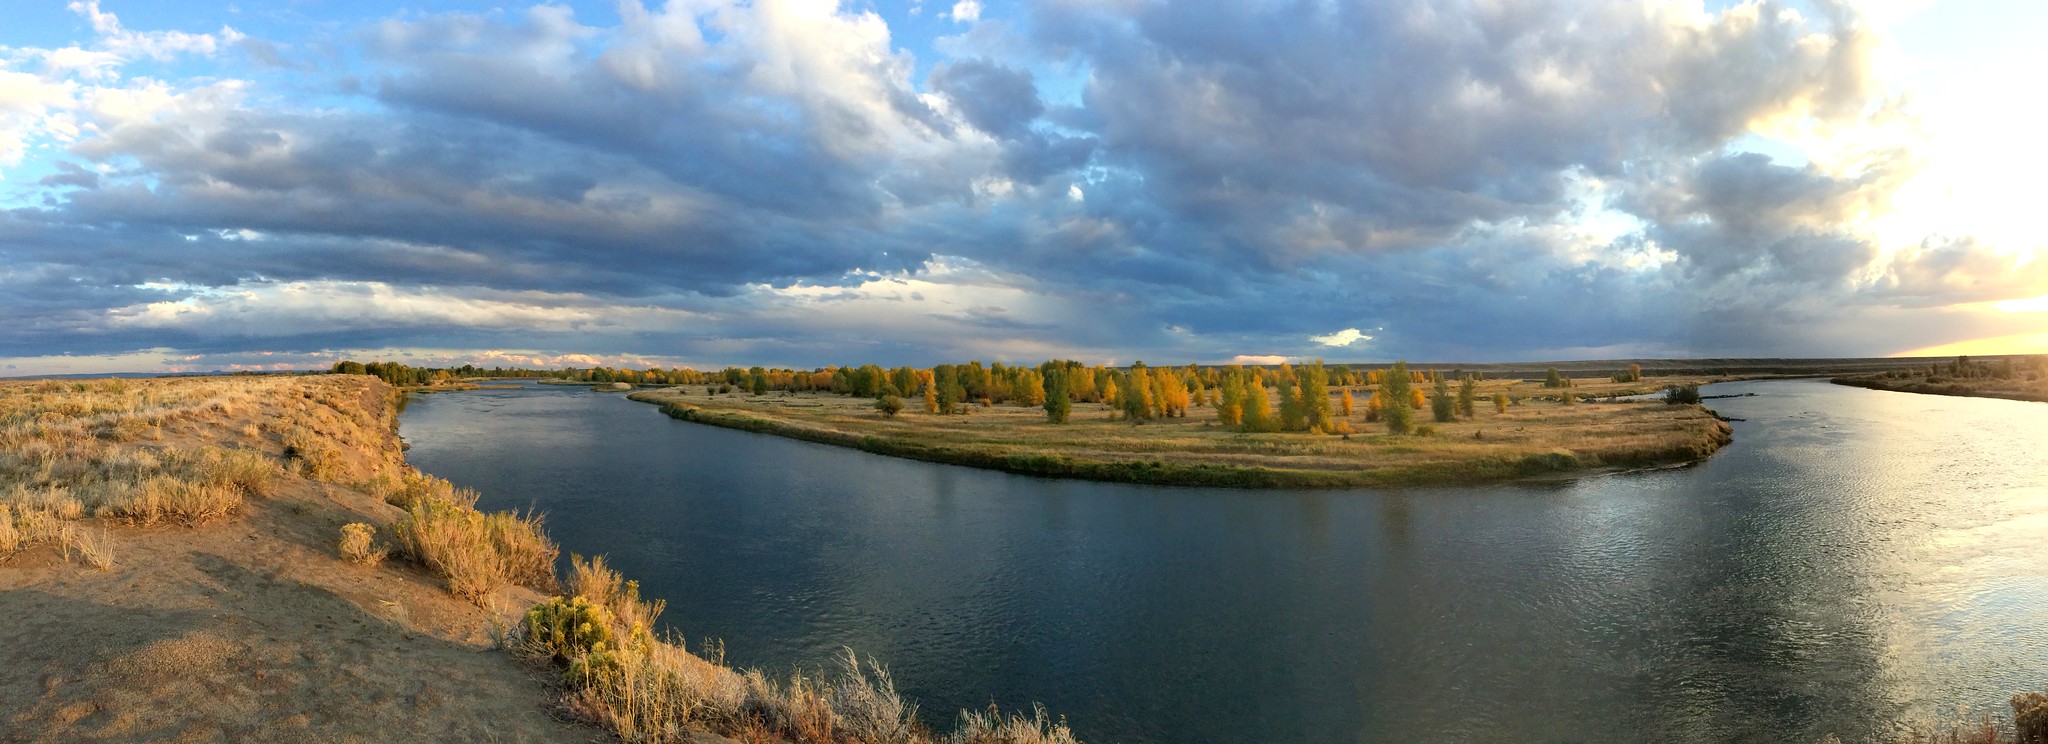 Green River on Seedskadee National Wildlife Refuge in Wyoming